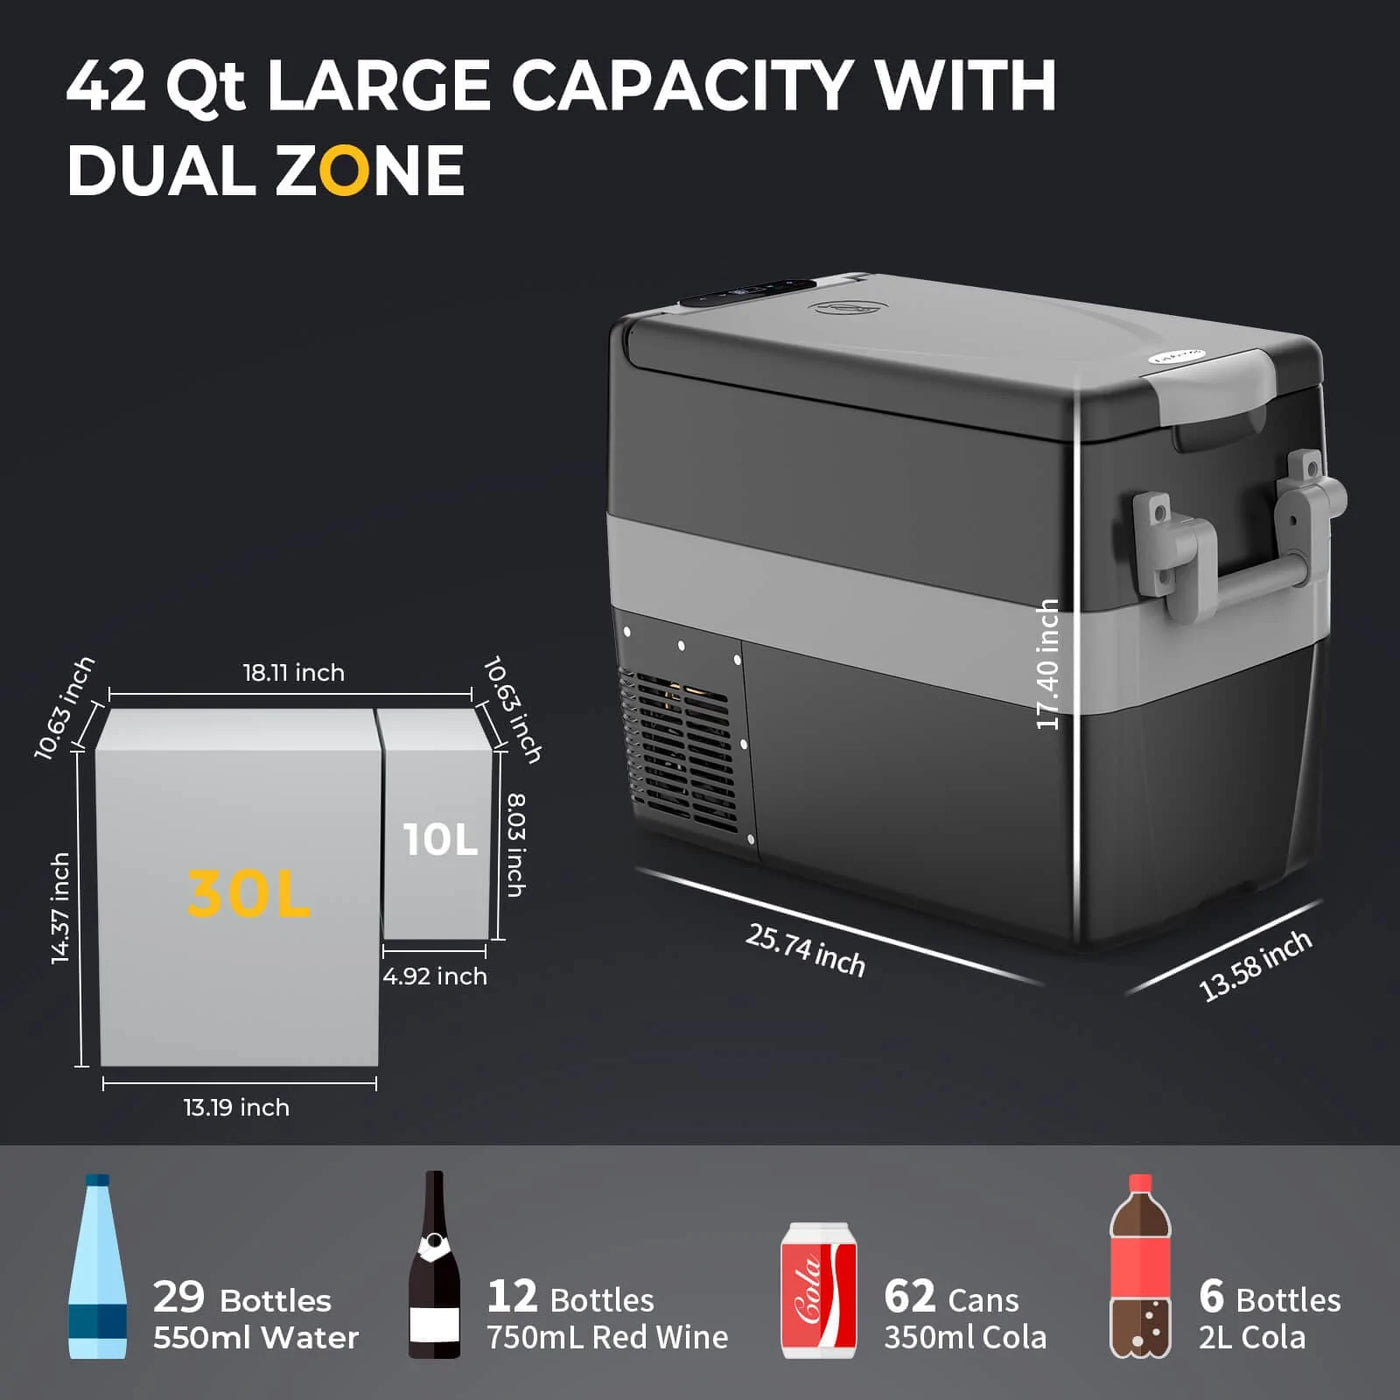 BougeRV 42 Quart (40L) Portable Car Refrigerator Fridge Freezer - Smart Nature Store